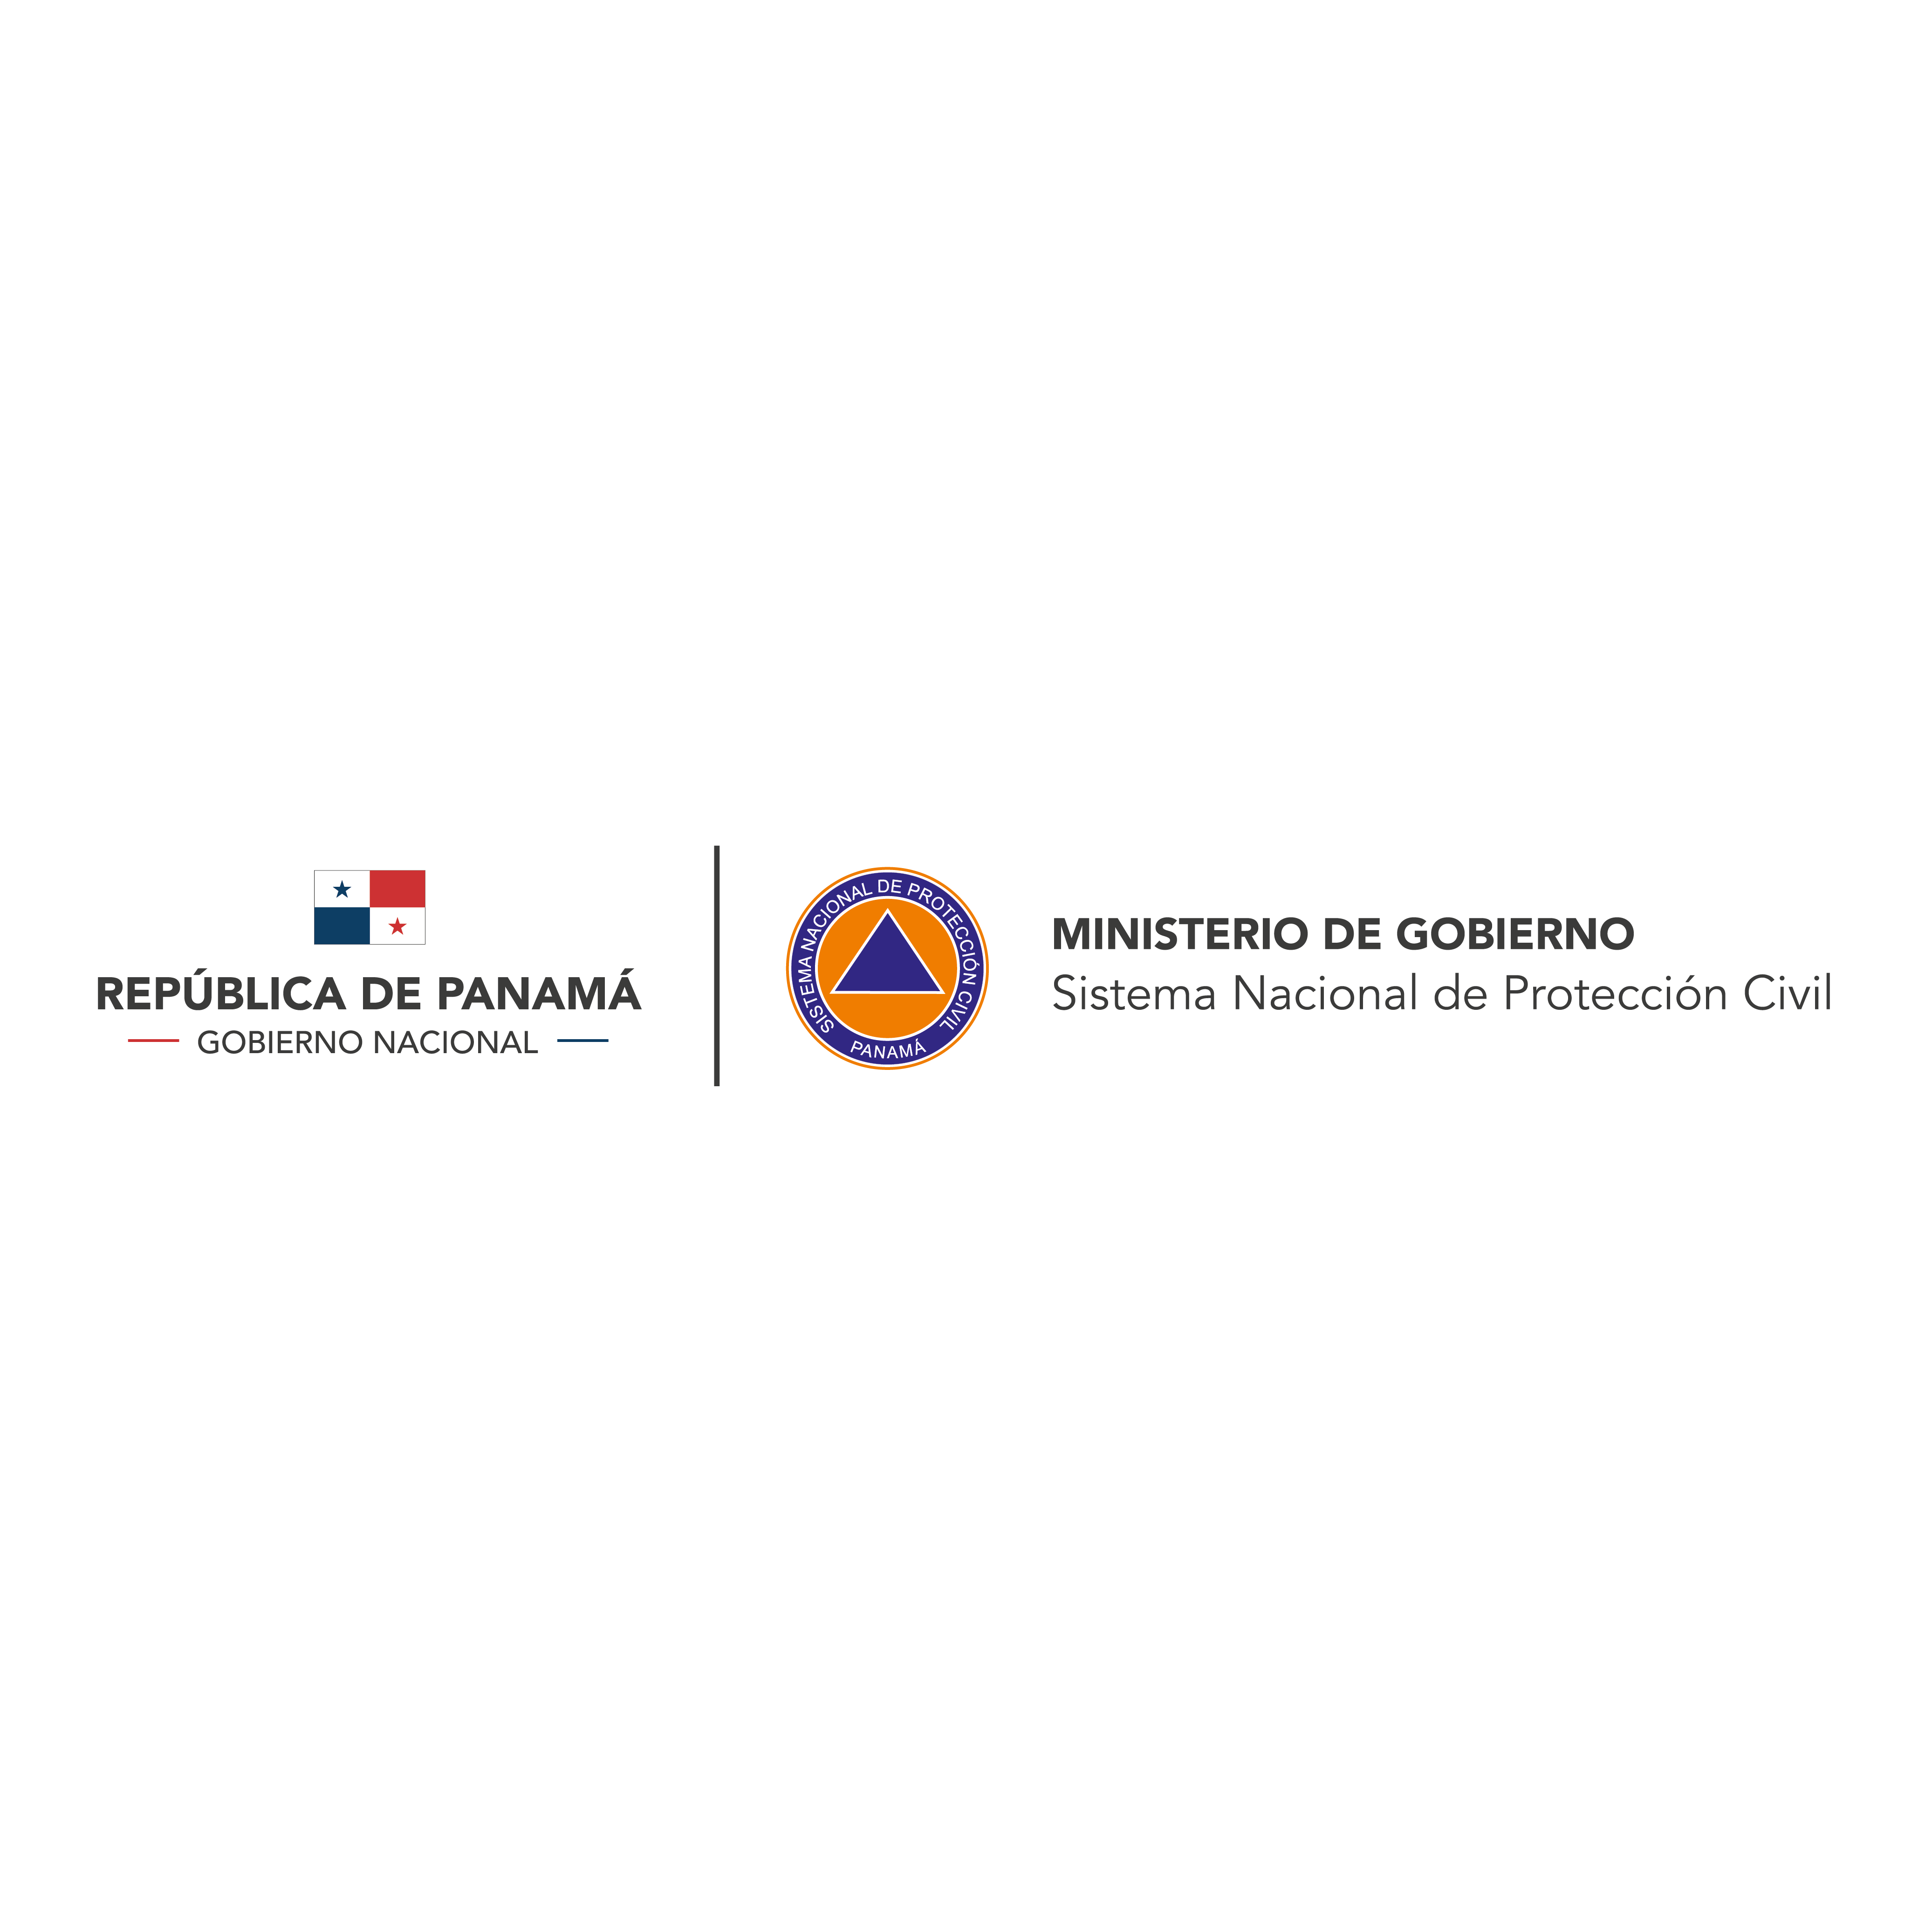 SINAPROC Panama - National Civil Protection System